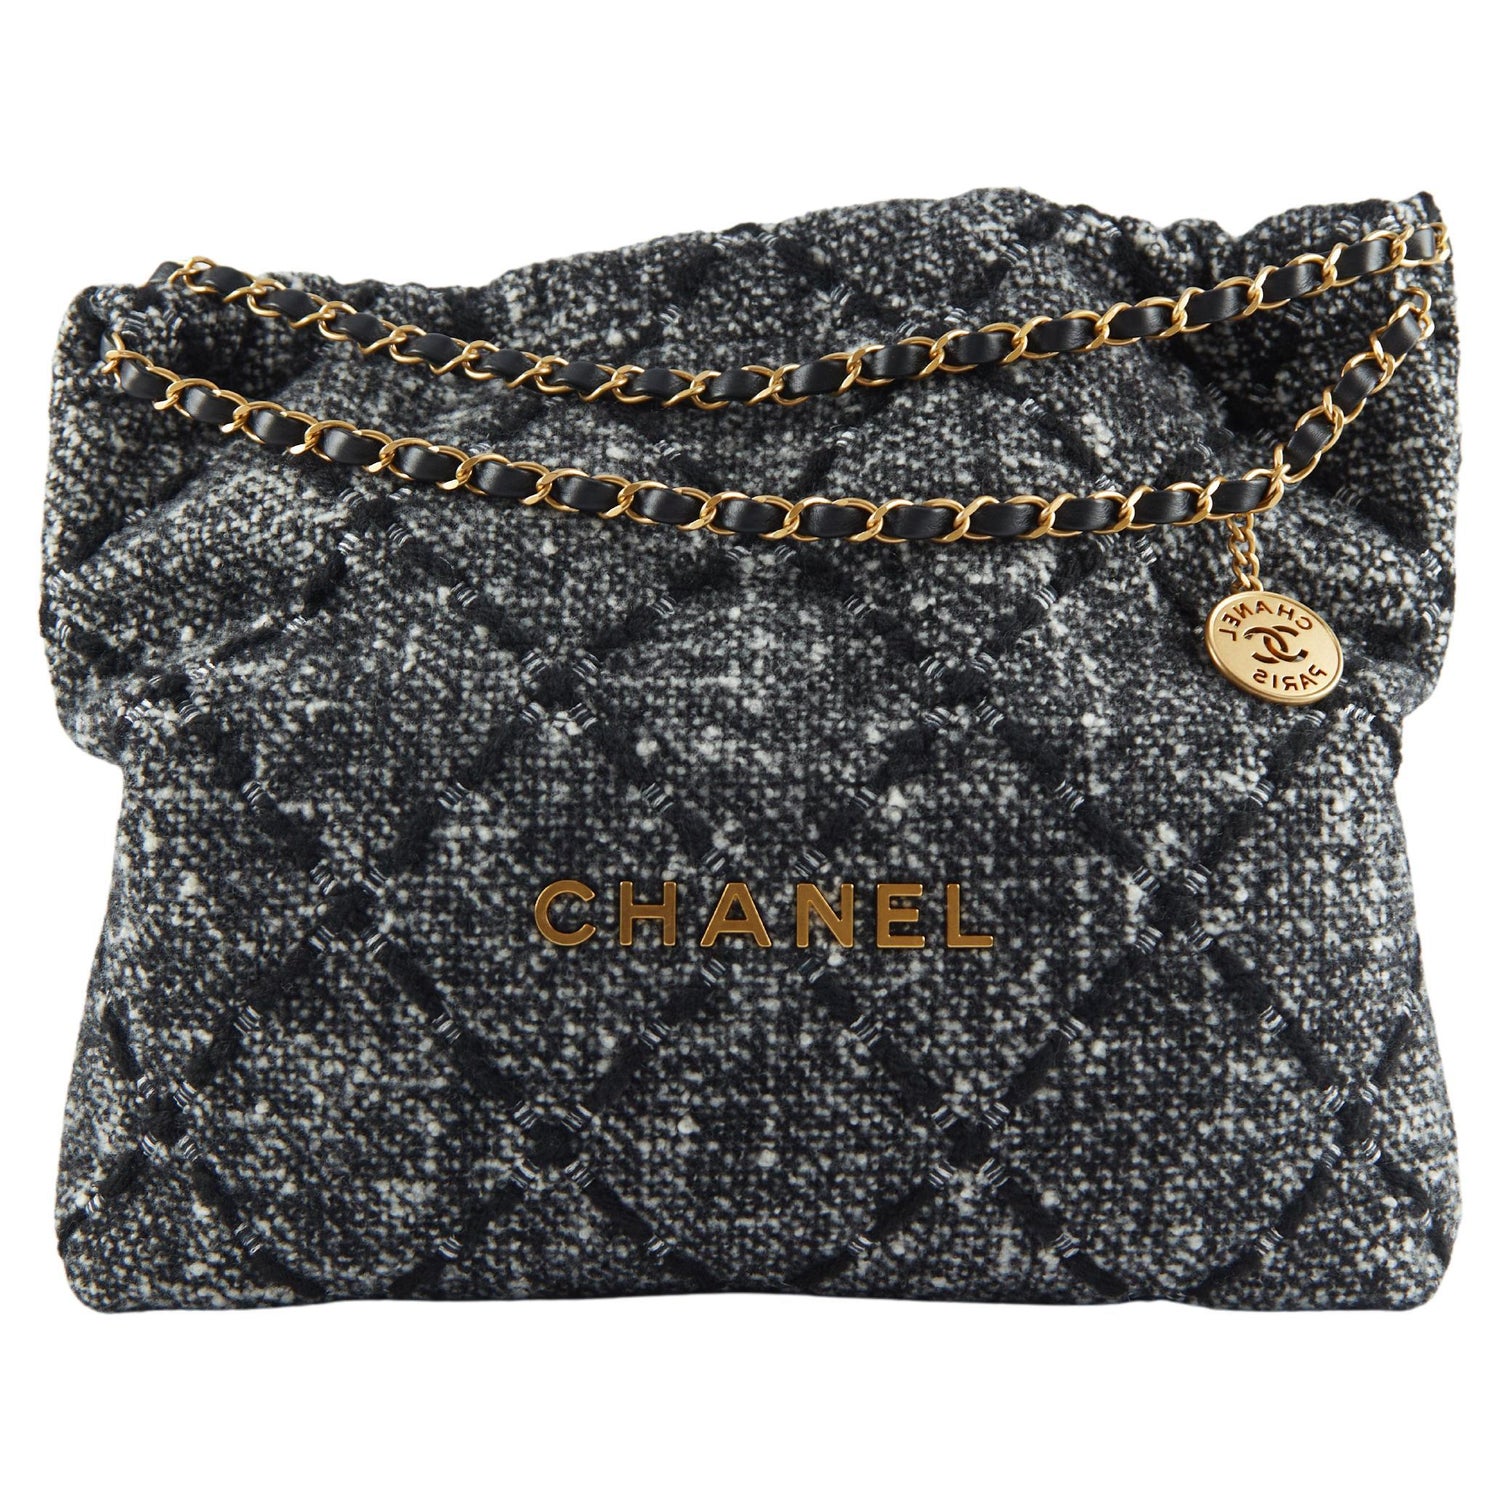 CHANEL 22 Handbag, Tweed Patchwork Gold-tone Metal, Black, Gray, Pink White  CHANEL